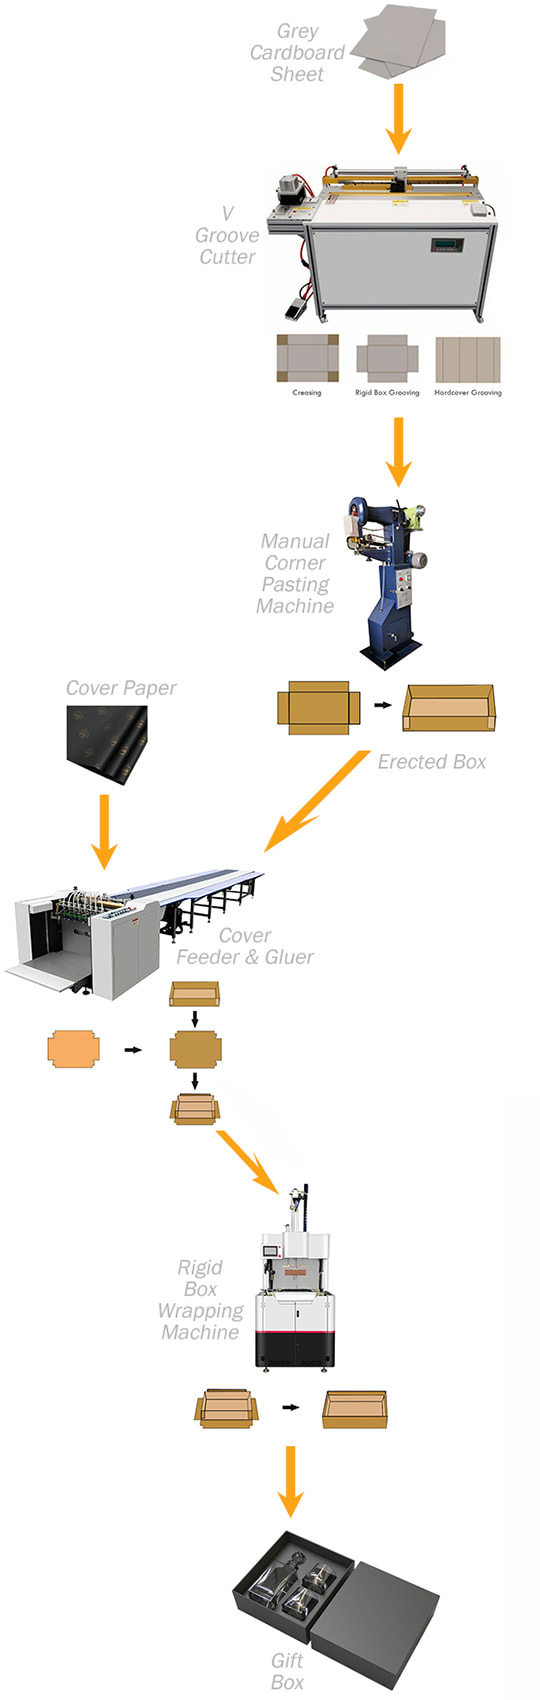 Cardboard V Grooving Machine - Packaging Machine - 3